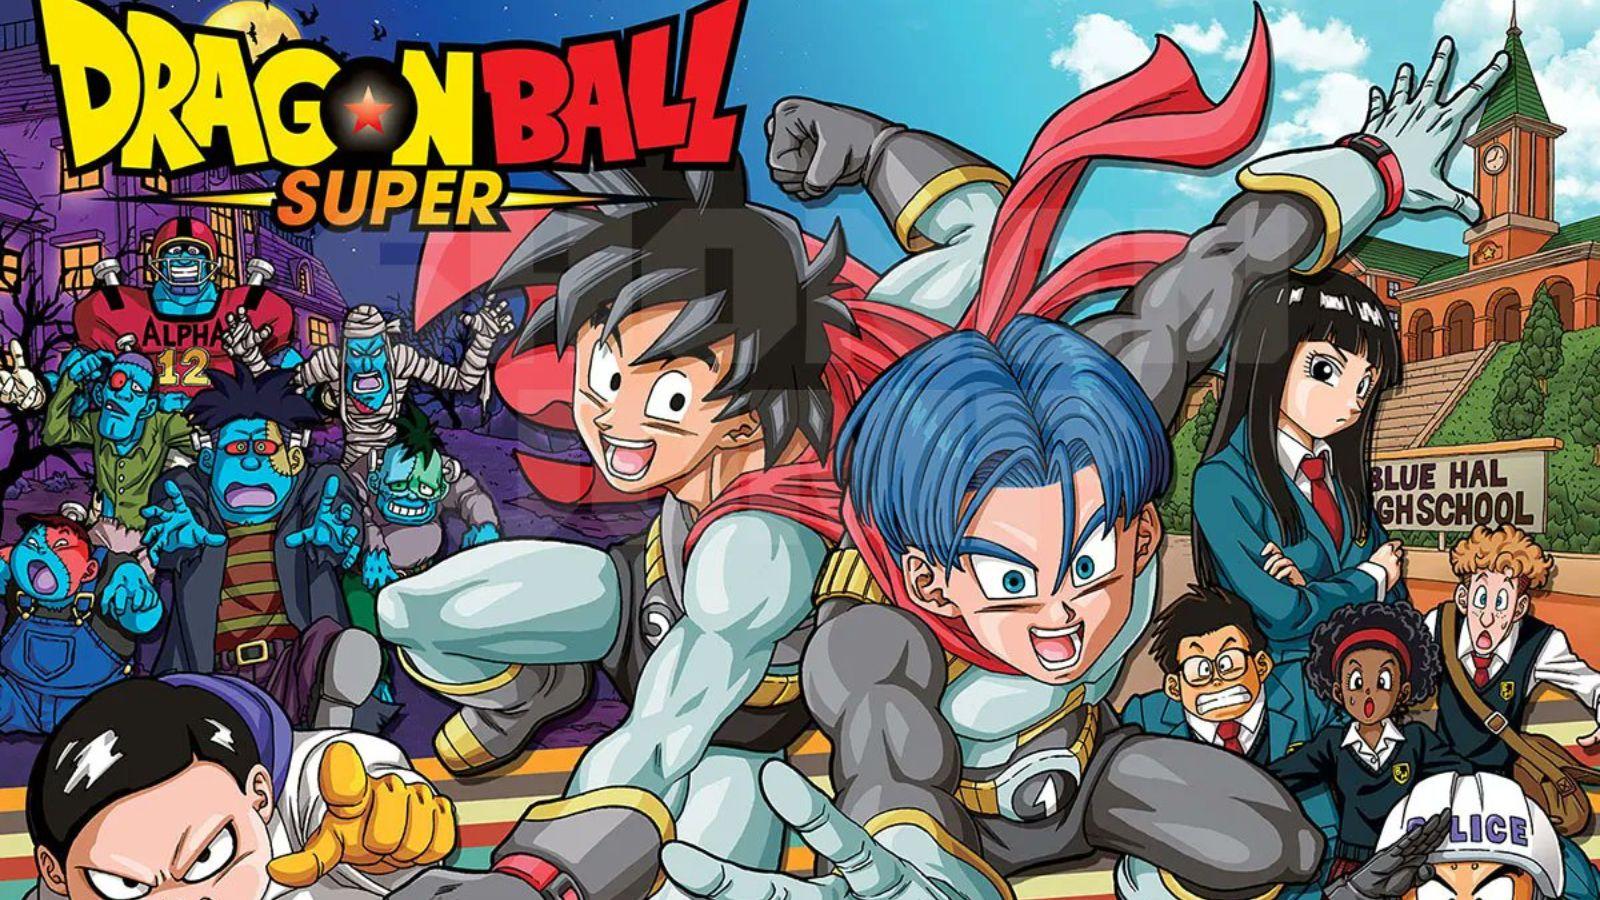 Dragon Ball Super: Super Hero' reveals theatrical release date